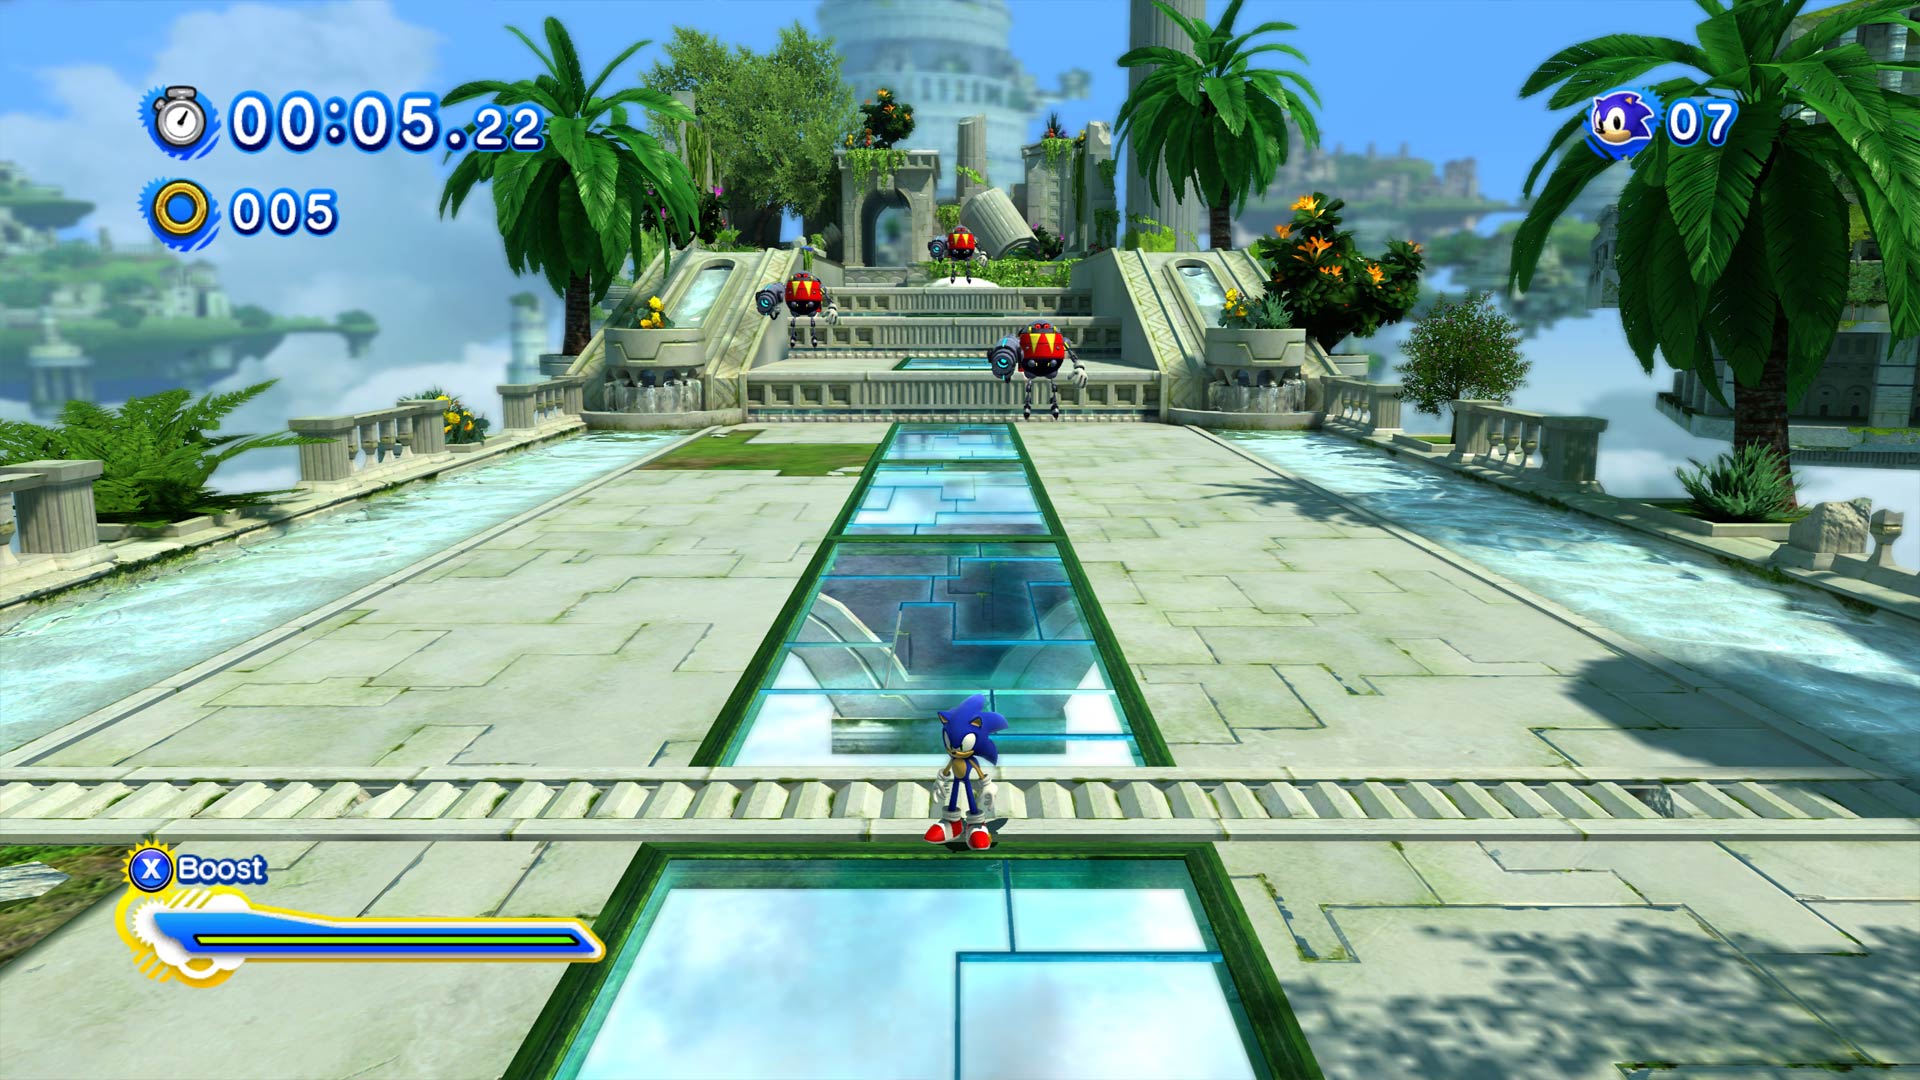 O MILAGRE de Sonic Generations no Xbox Series S